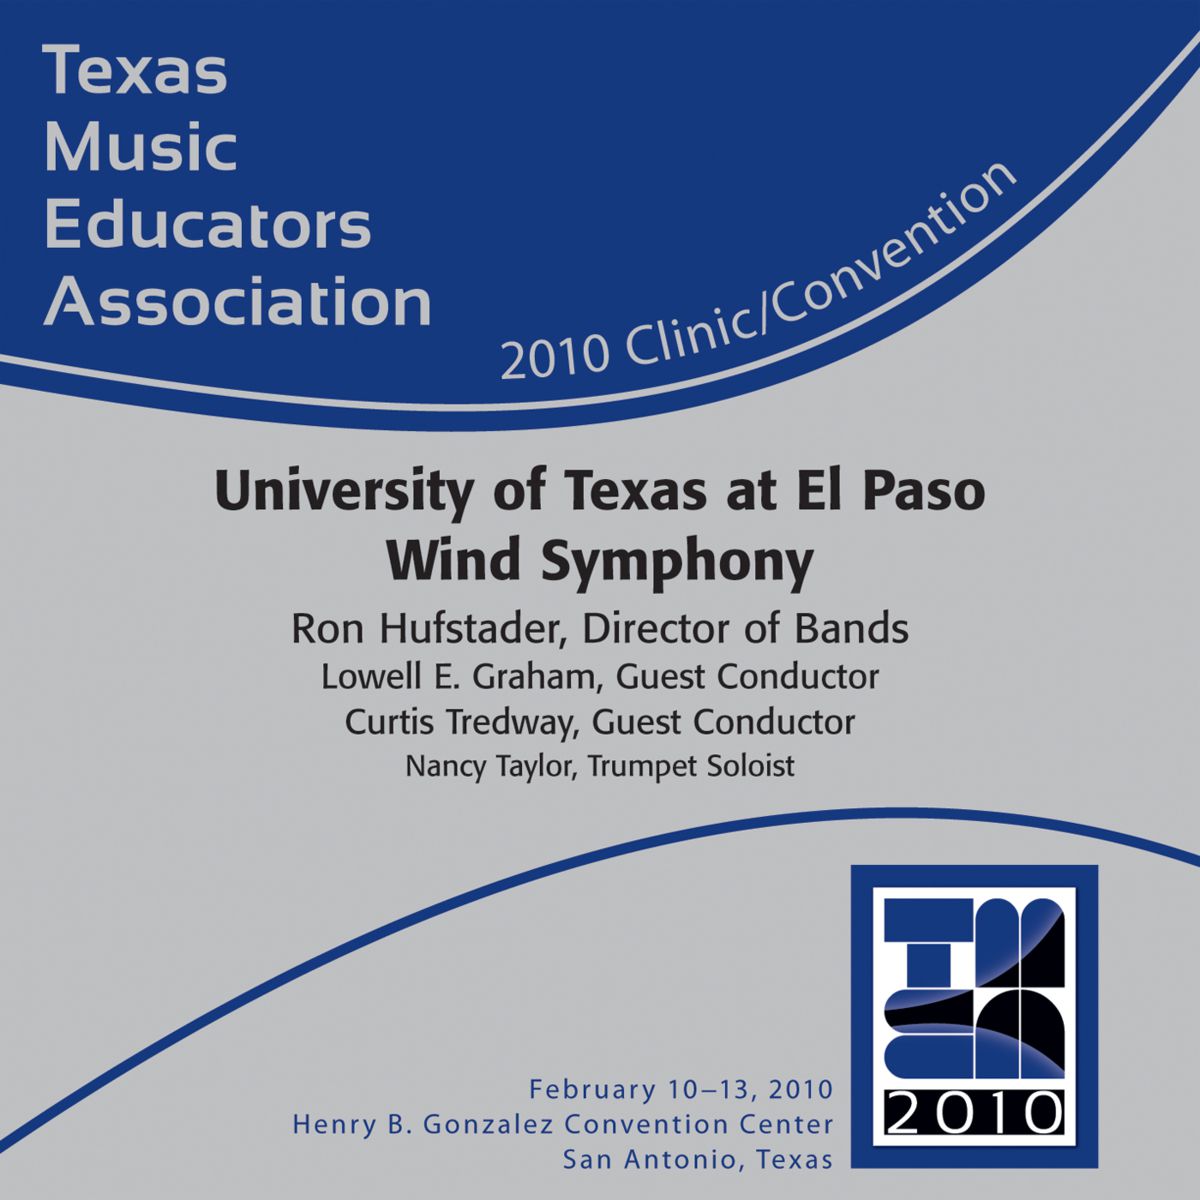 2010 Texas Music Educators Association: University of Texas at El Paso Wind Symphony - click here